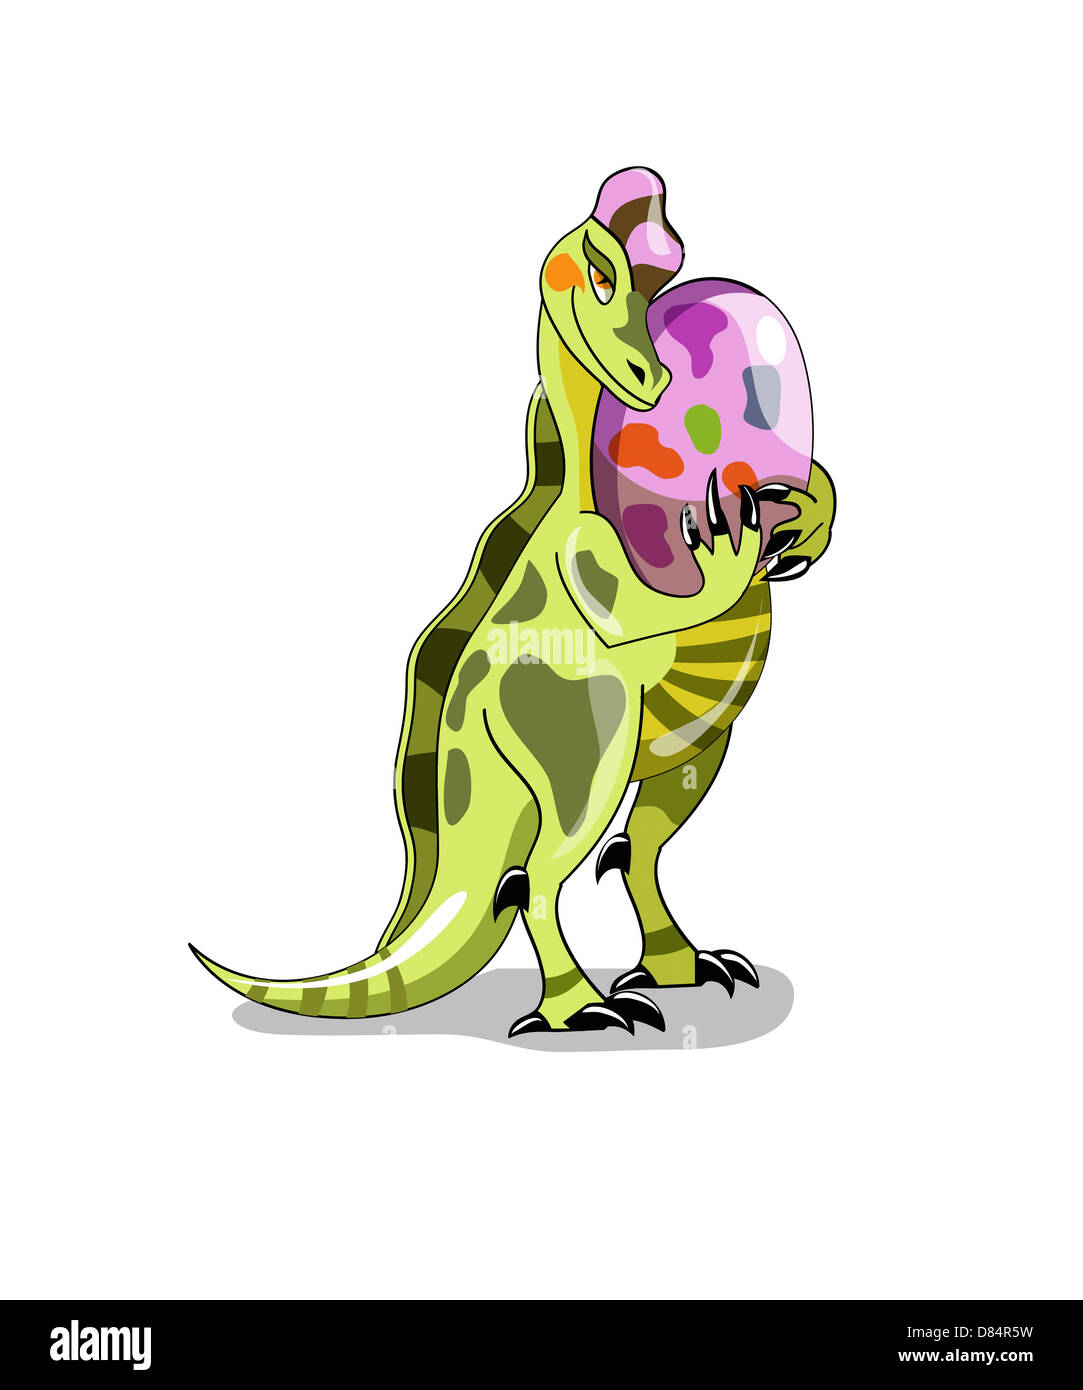 Illustration of a Lambeosaurus holding an egg. Stock Photo